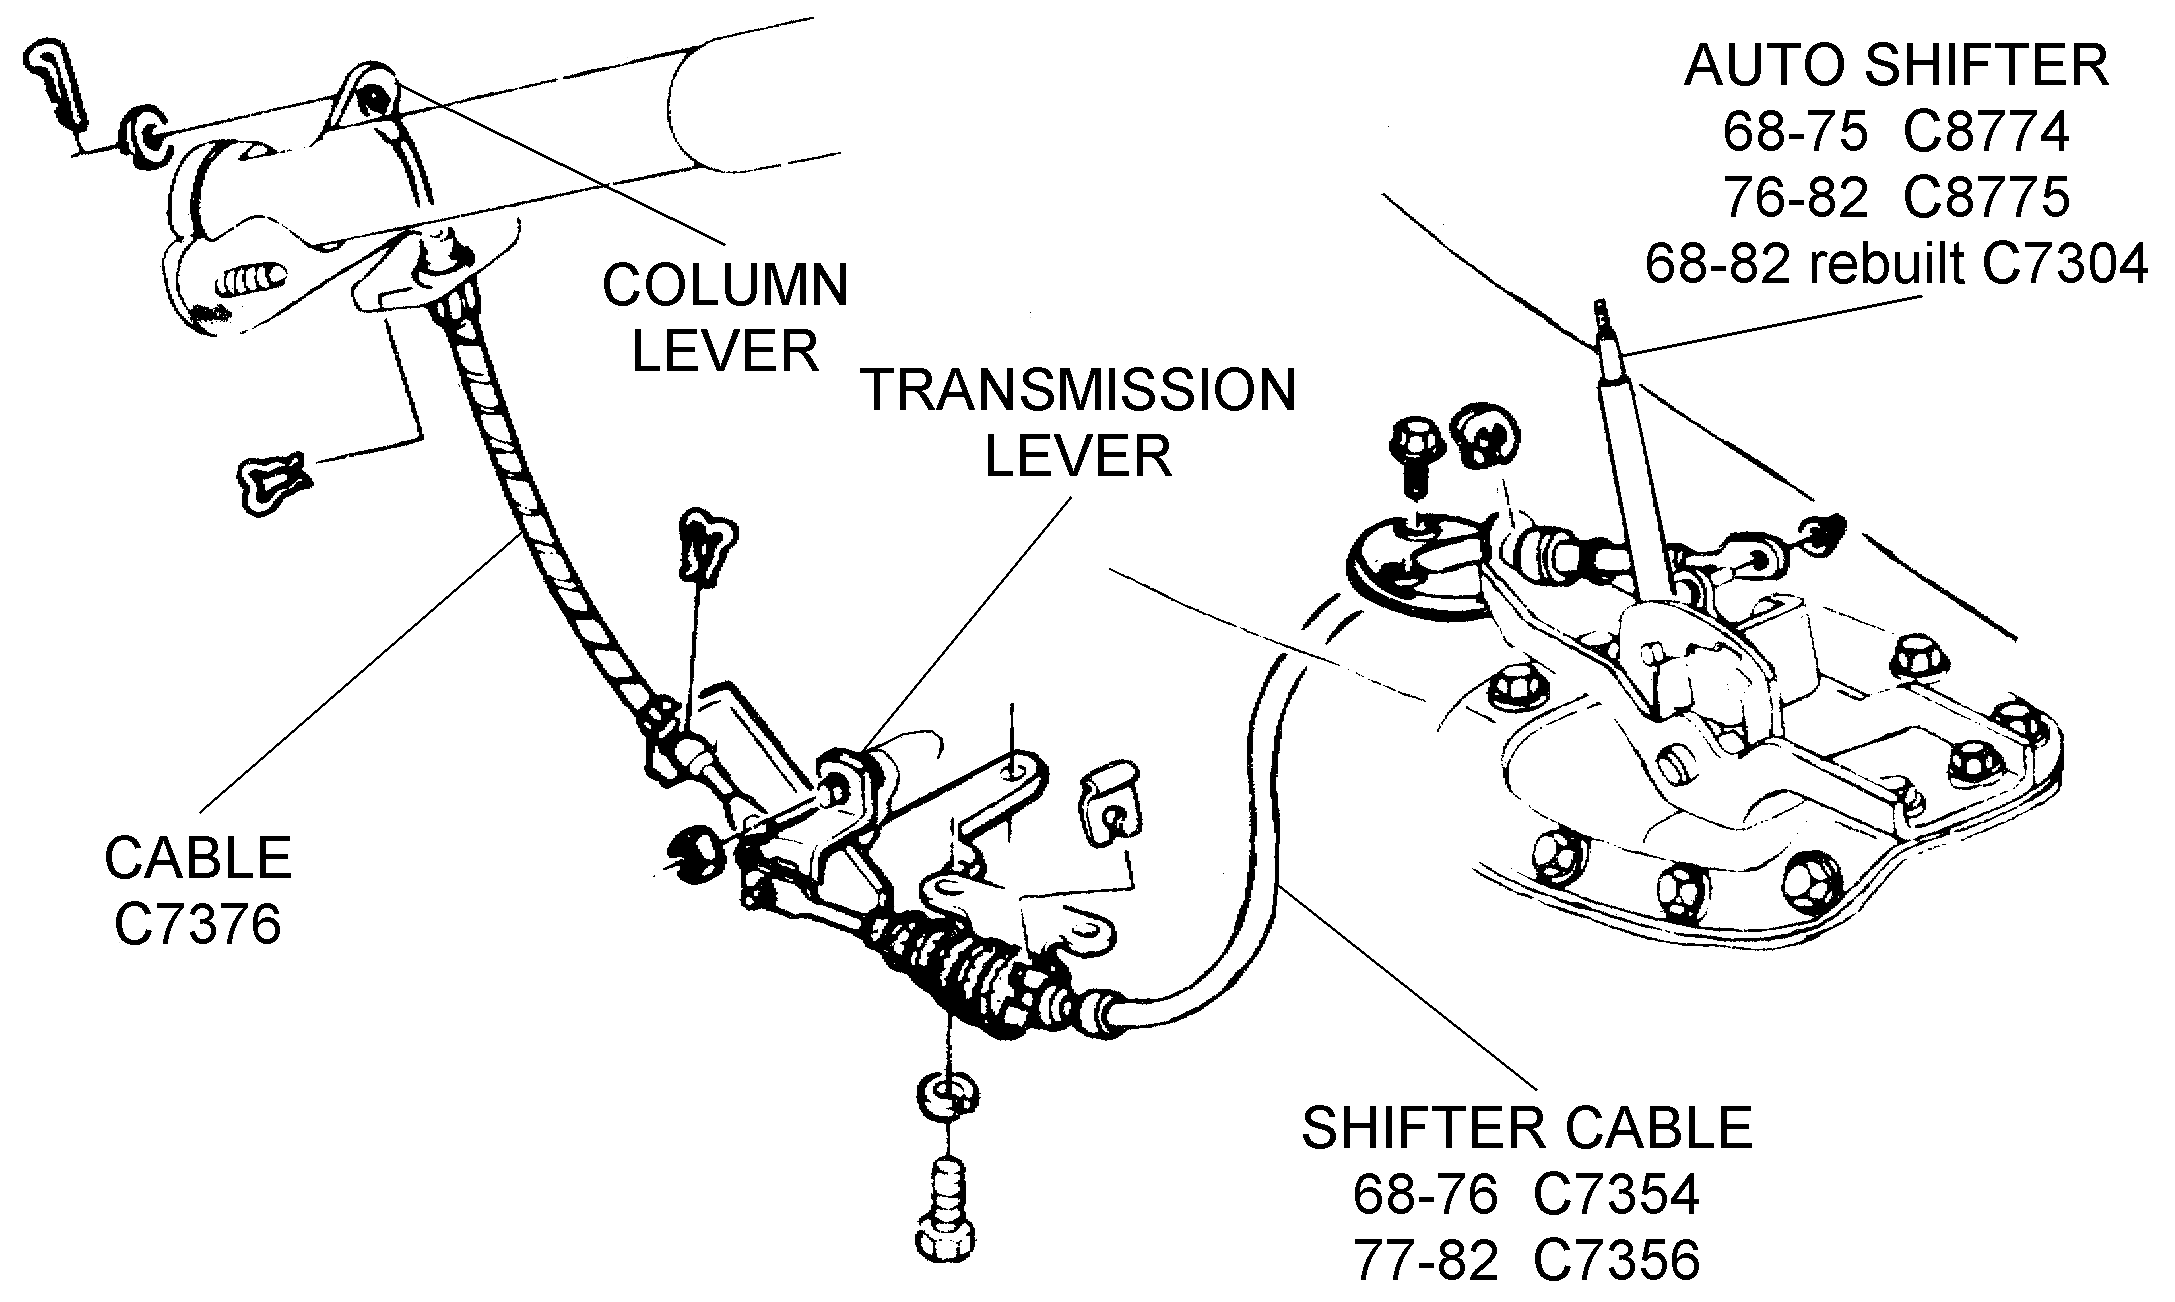 Automatic Transmission Detail - Diagram View